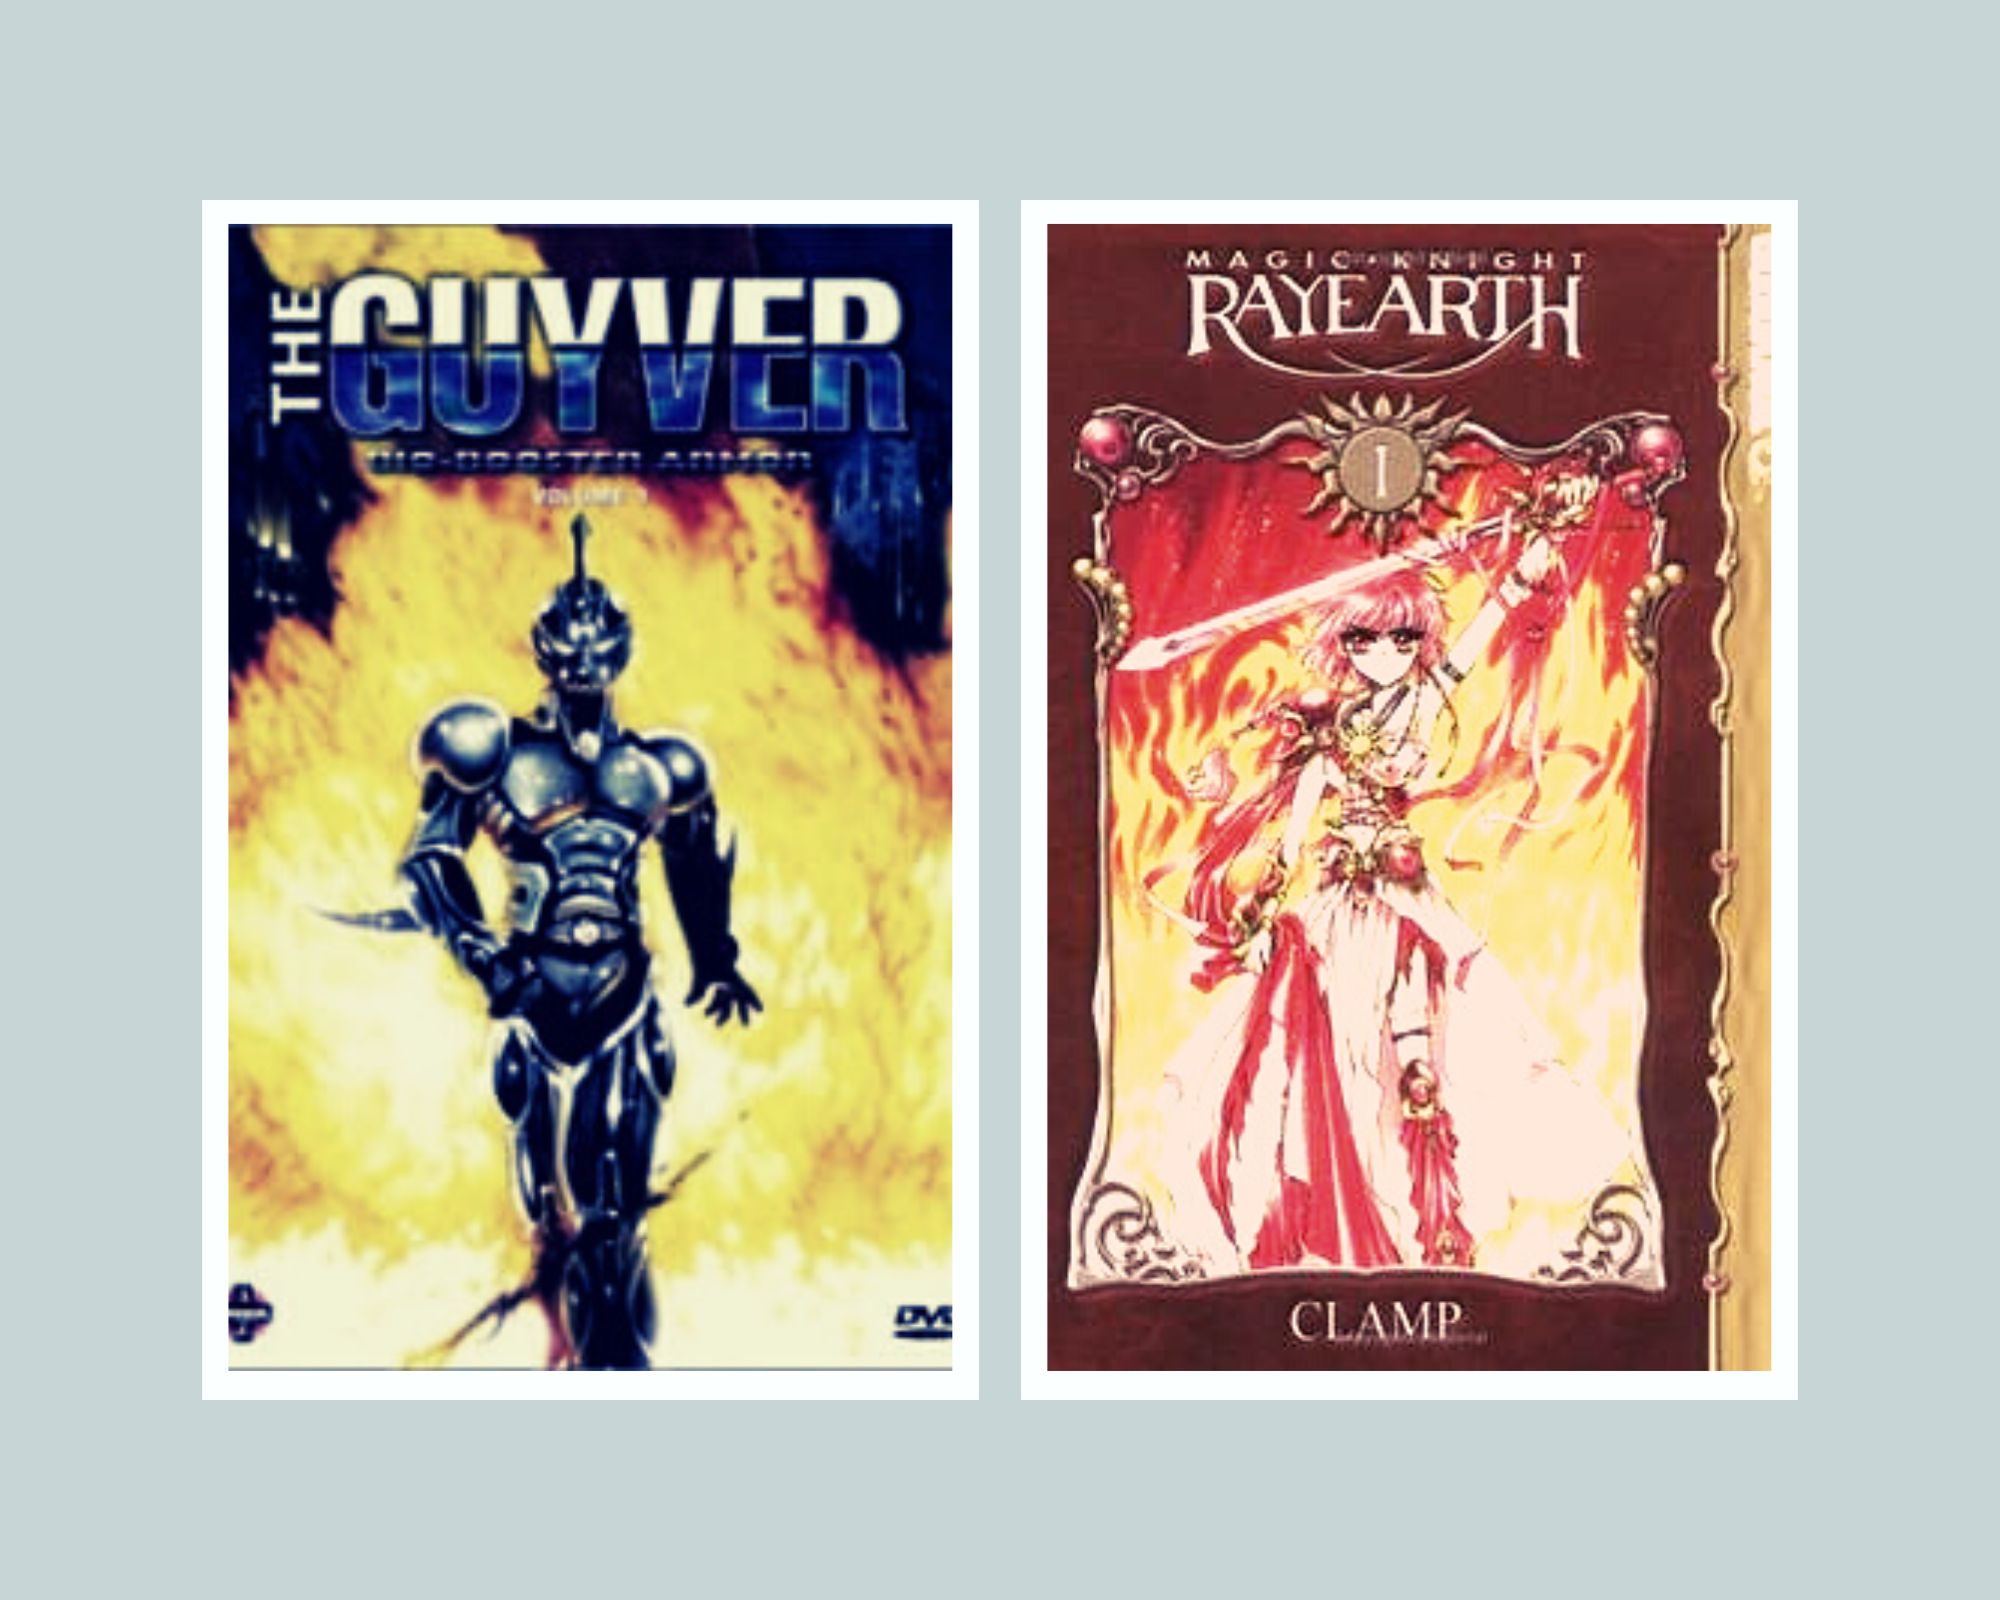 Cover art of Tokyopop's re-release of Magic Knight Rayearth I Volume 1, featuring Hikaru Shidou, Kyoushoku Soukou Guyver (1989)
The Guyver: Bio-Booster Armor DVD